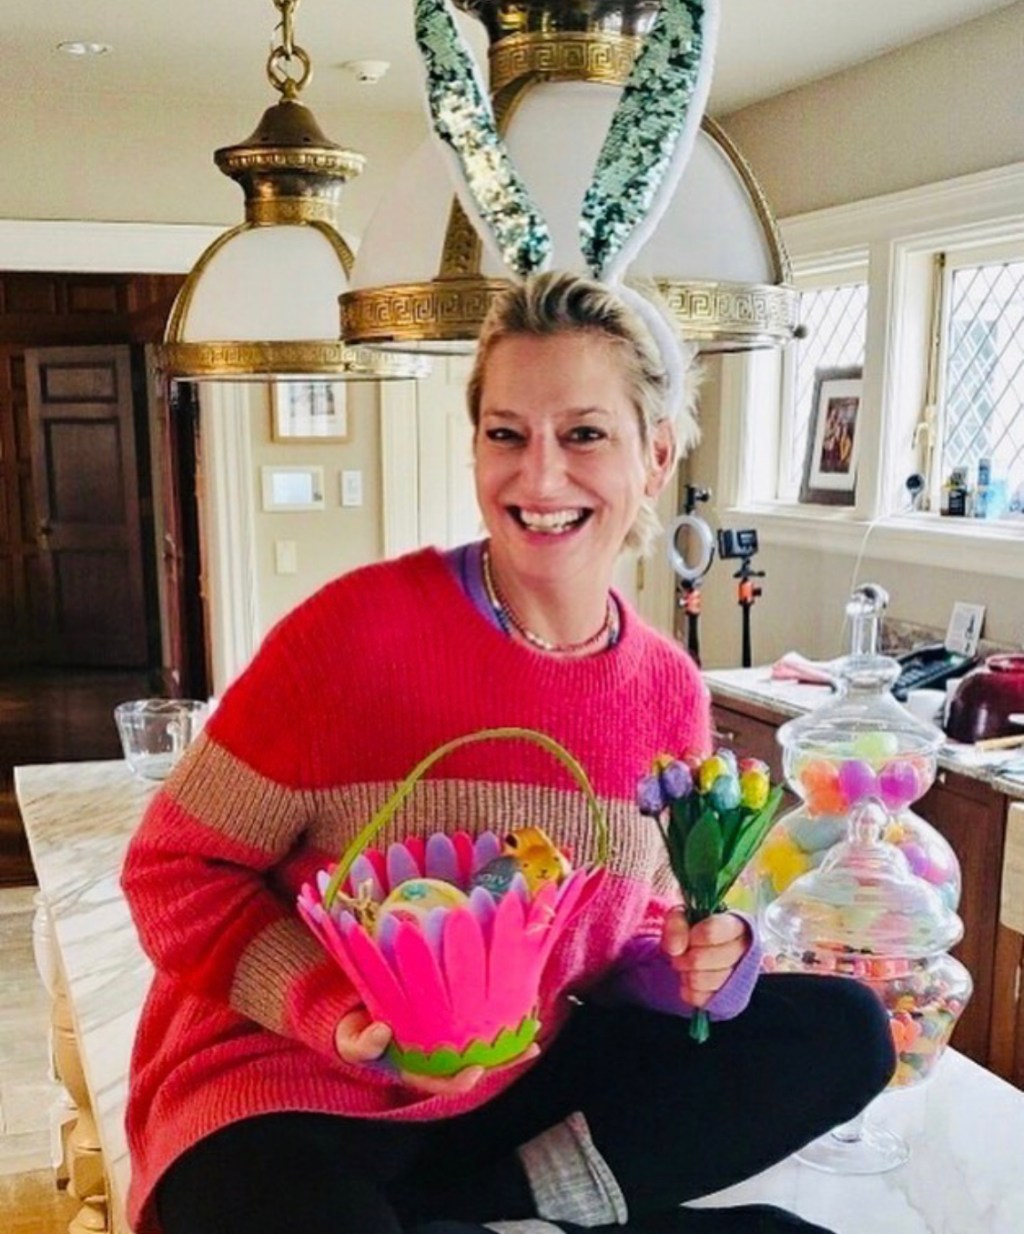 Dorinda Medley Easter